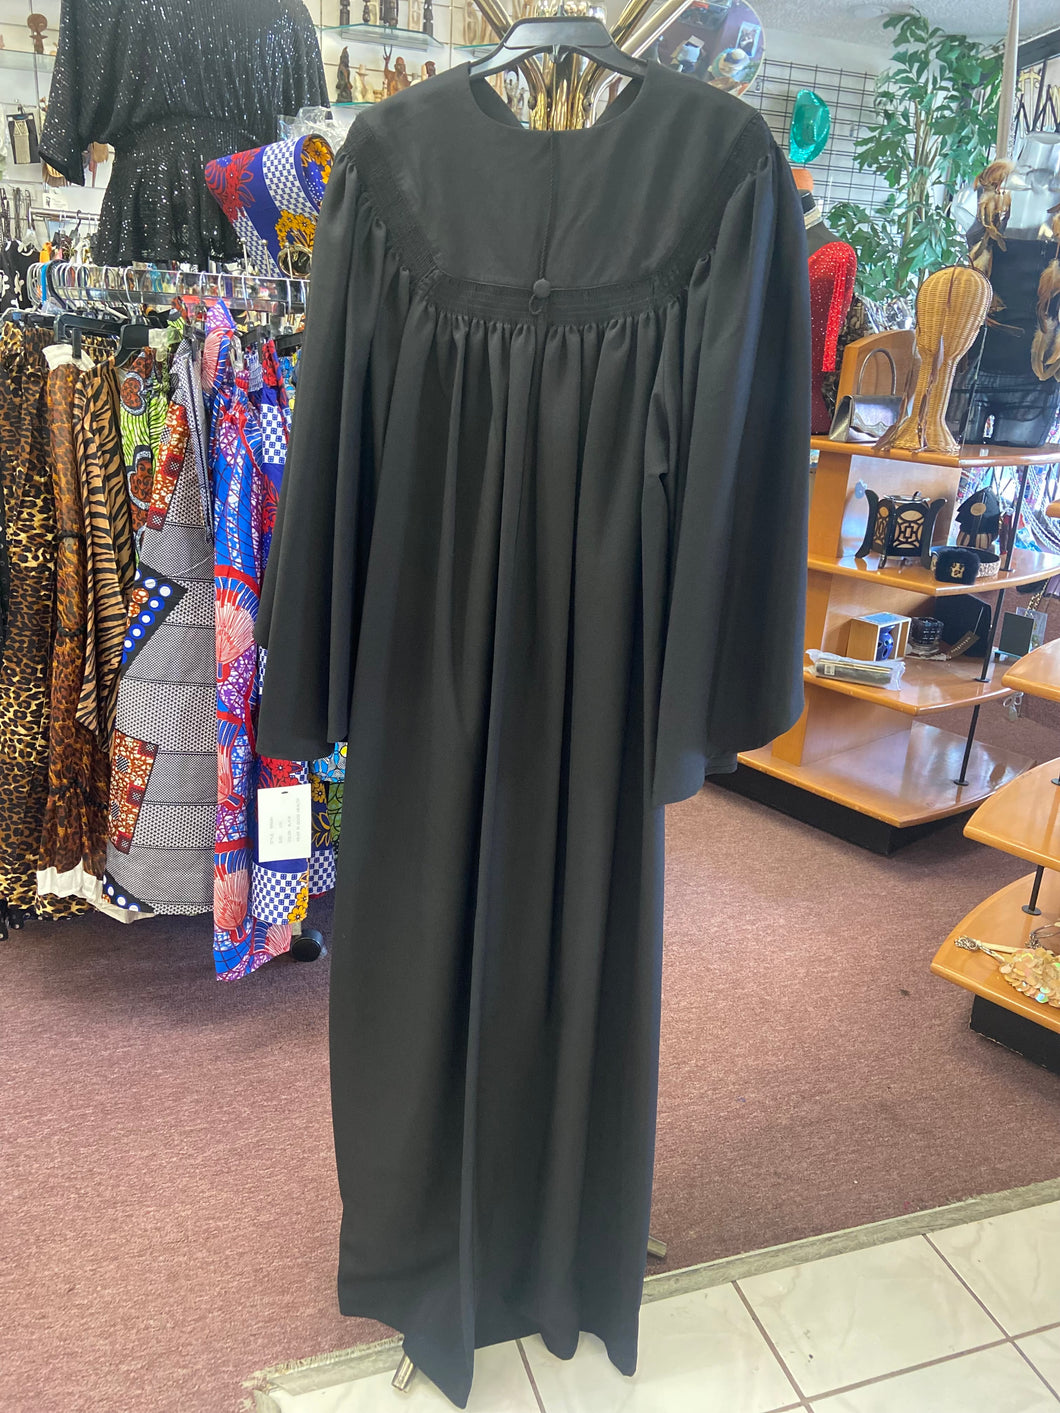 Black choir robe